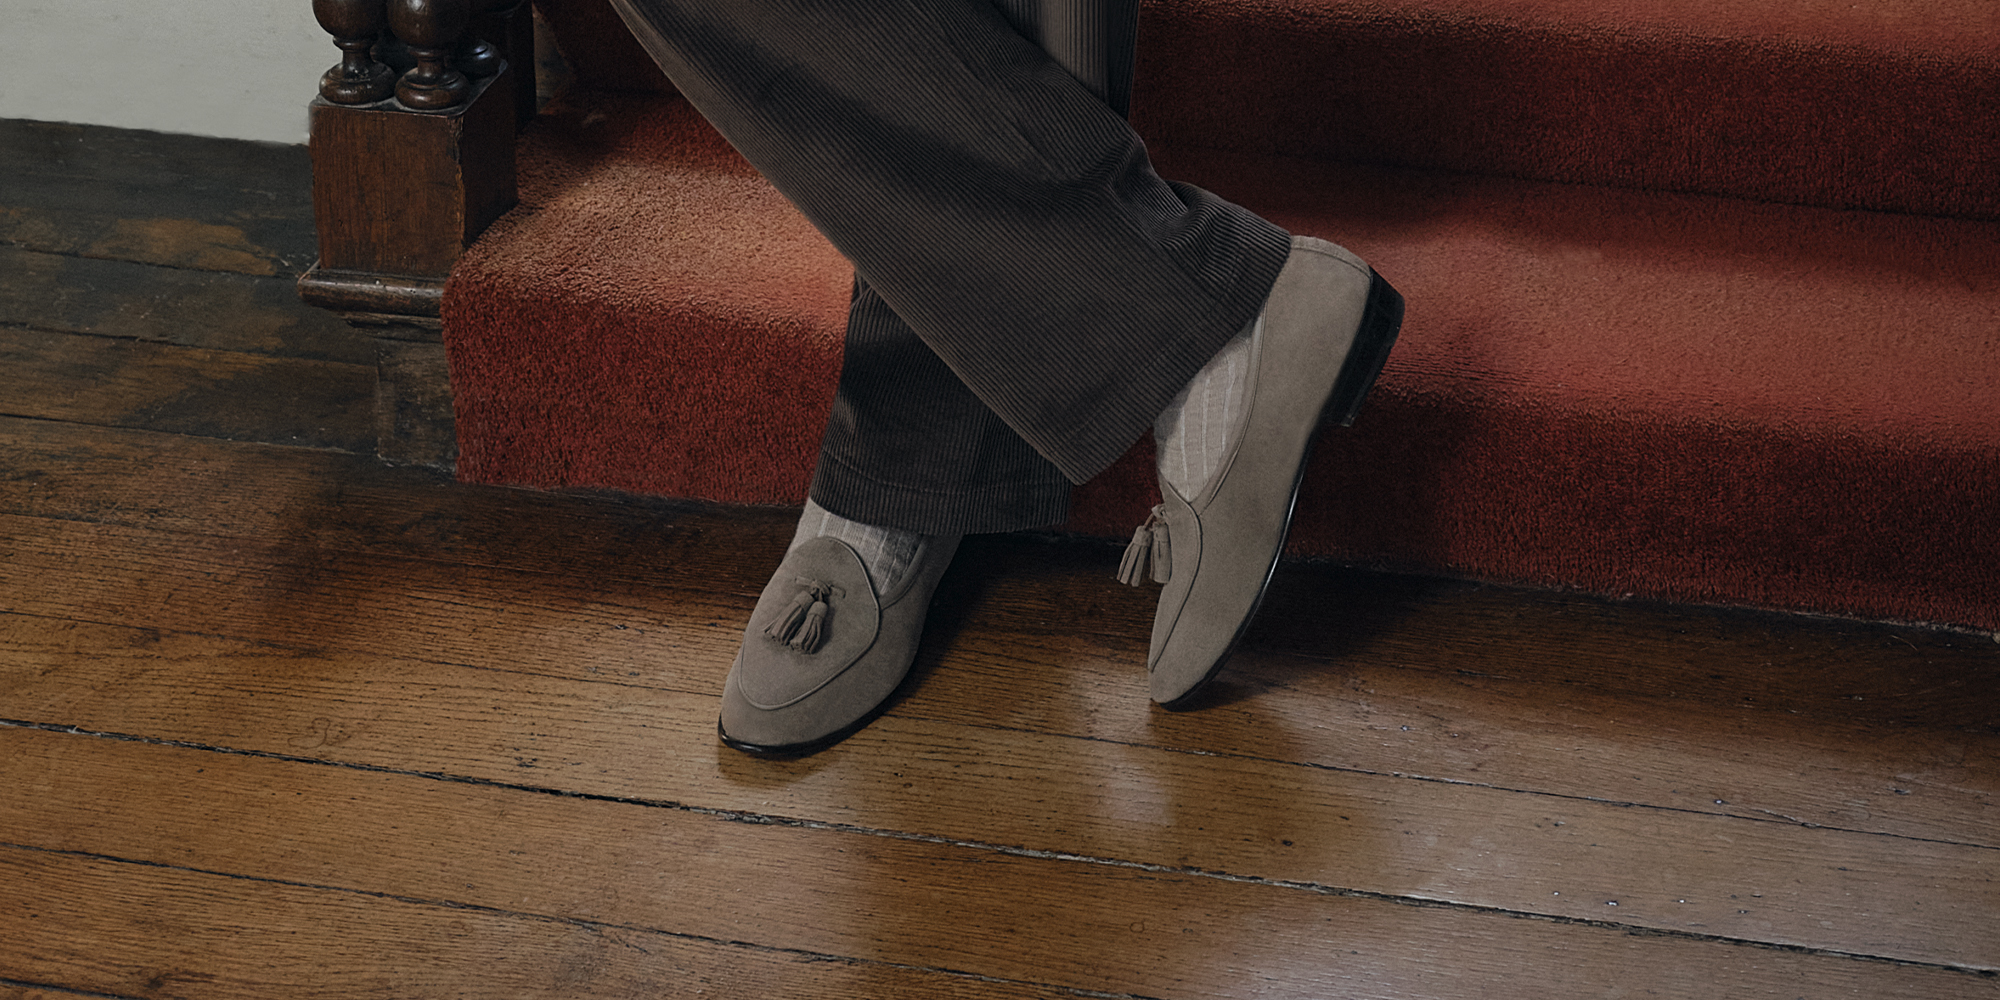 A man wearing greige suede tassel loafers with socks, crossing his legs.